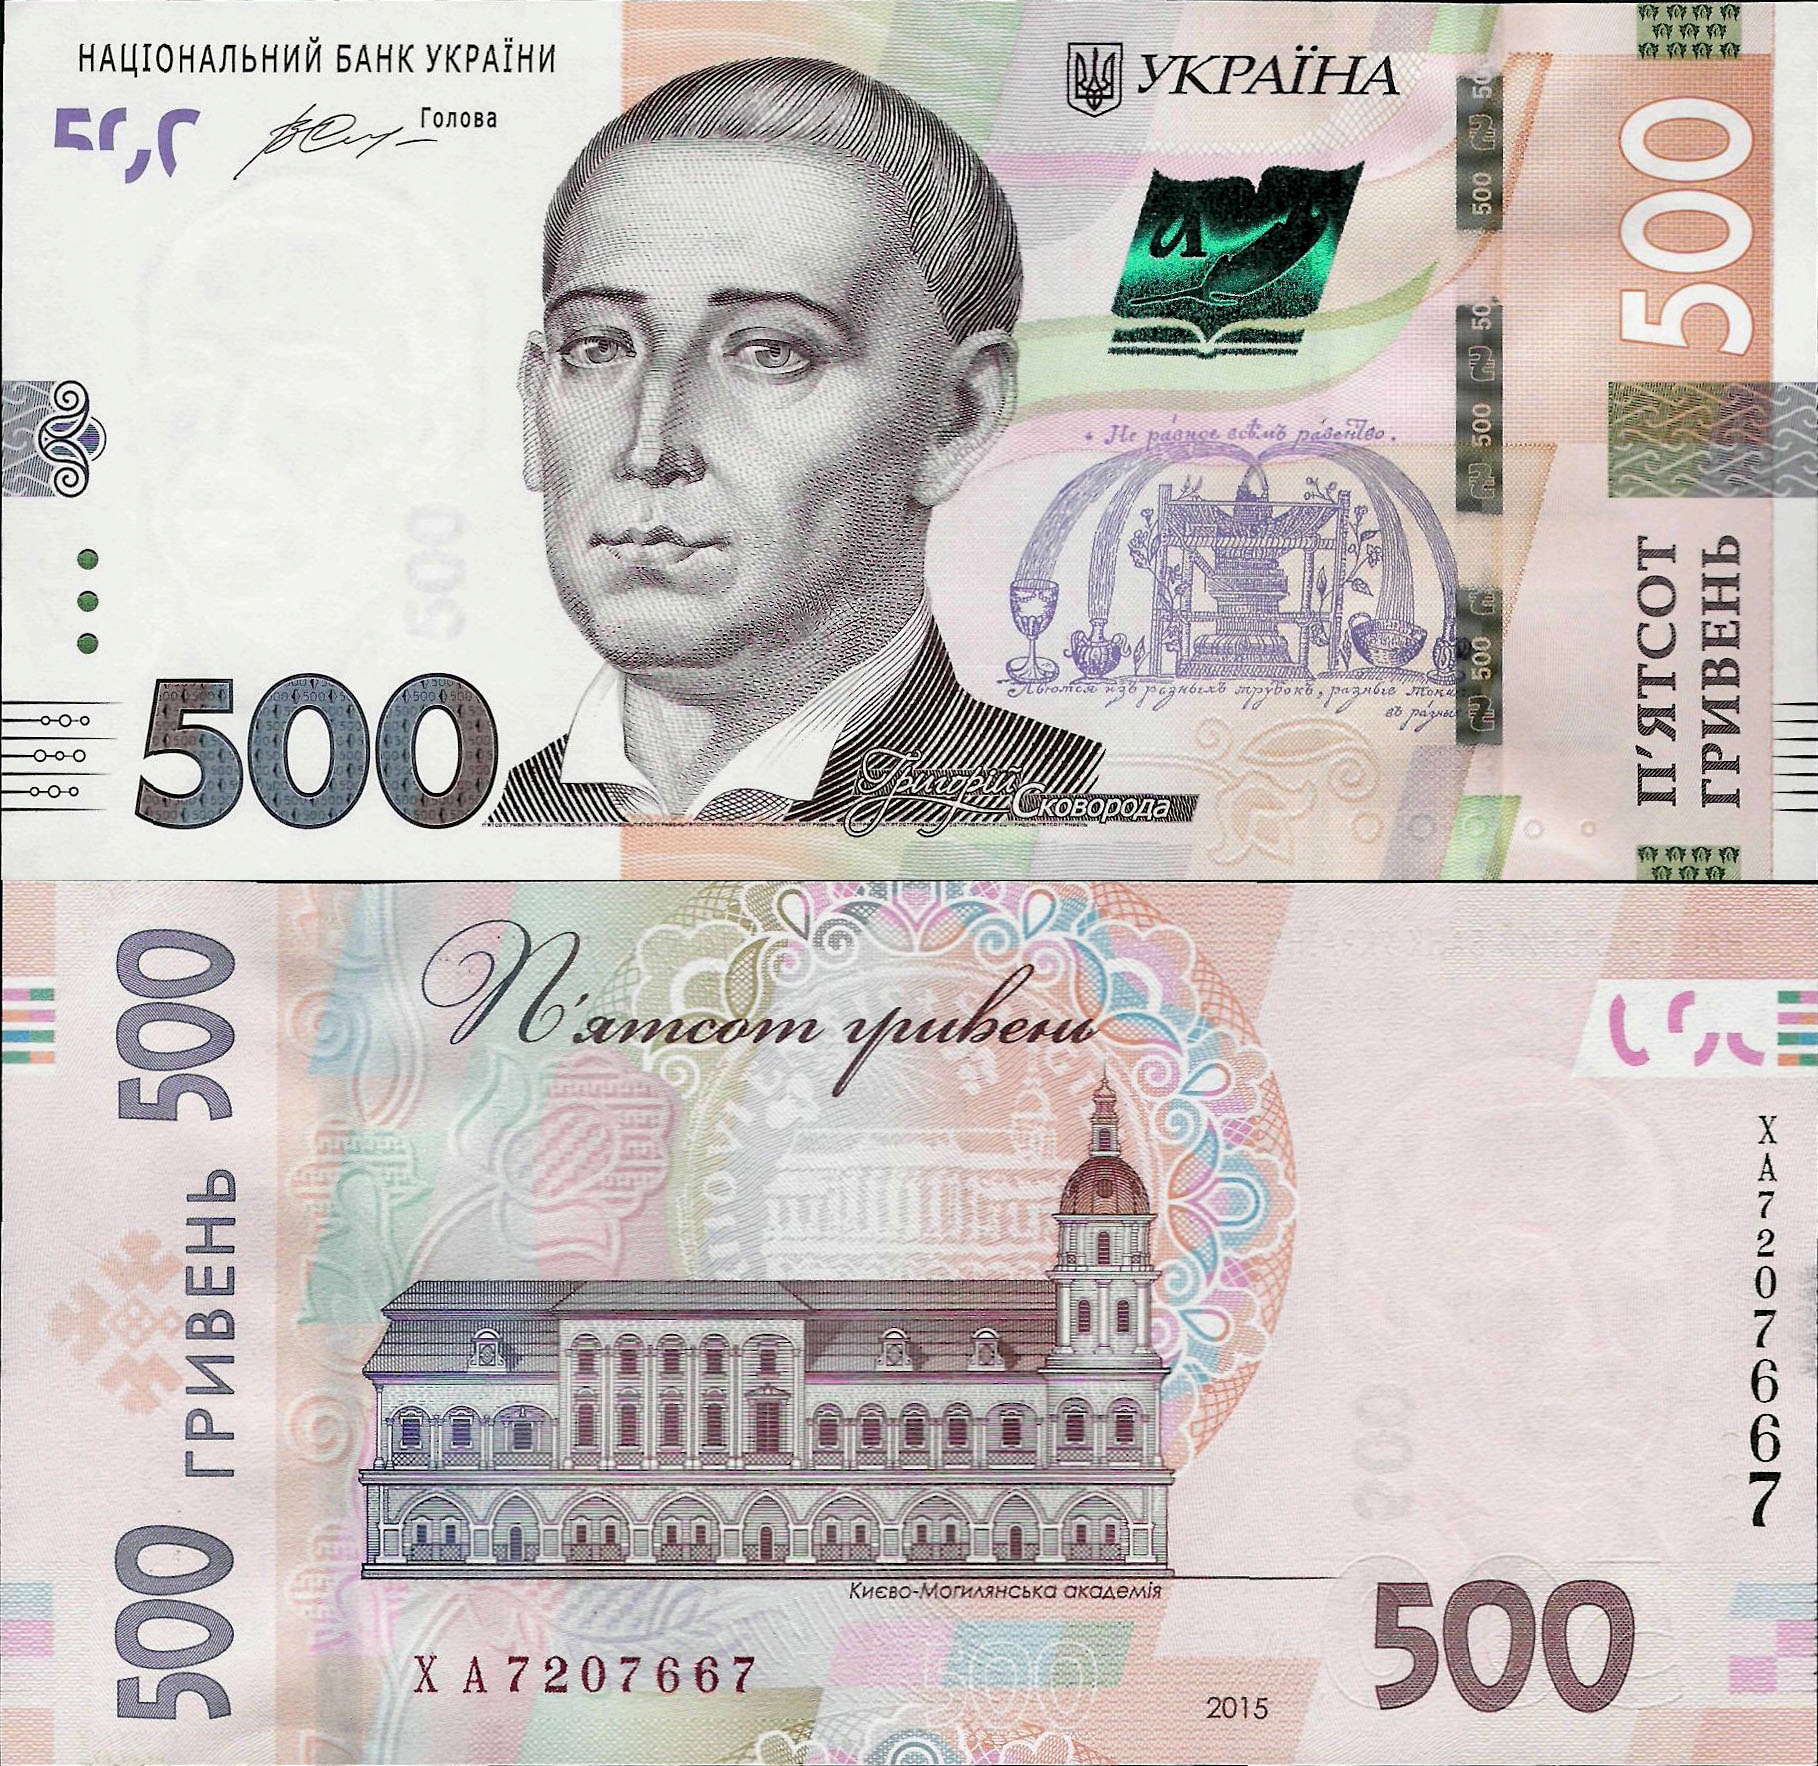 25000 гривен в рублях. Банкнота Украины 500 гривен. 500 Гривен купюра.